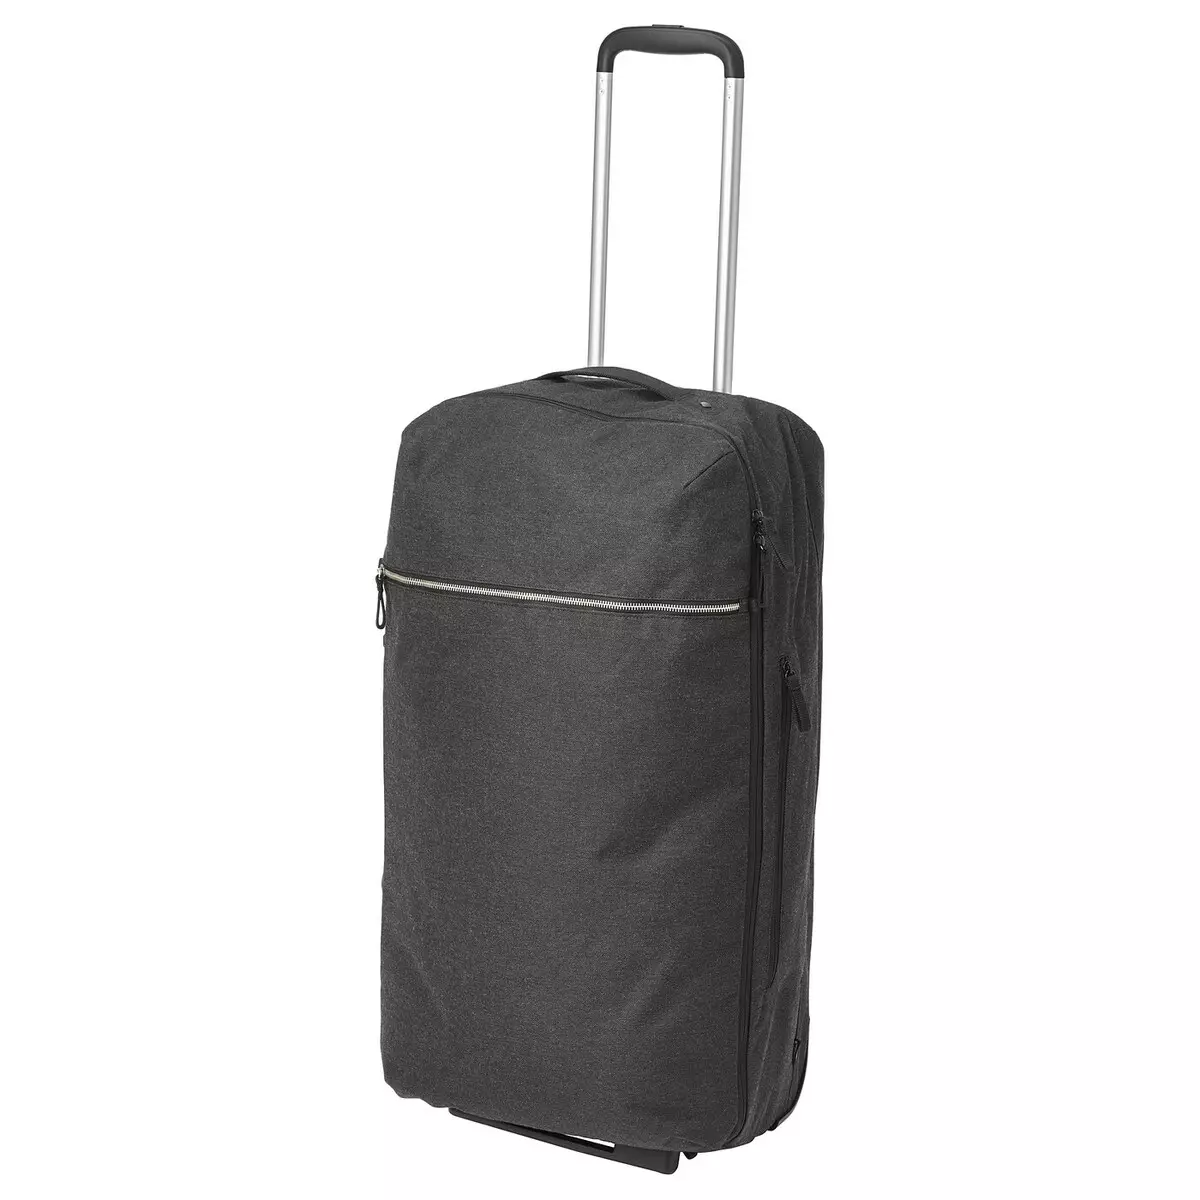 Ikea Backpacks: Incamake yikanzu yumukara-ivalisi ku ruziga nubundi moderi, uburyo bwo kwita 15421_17